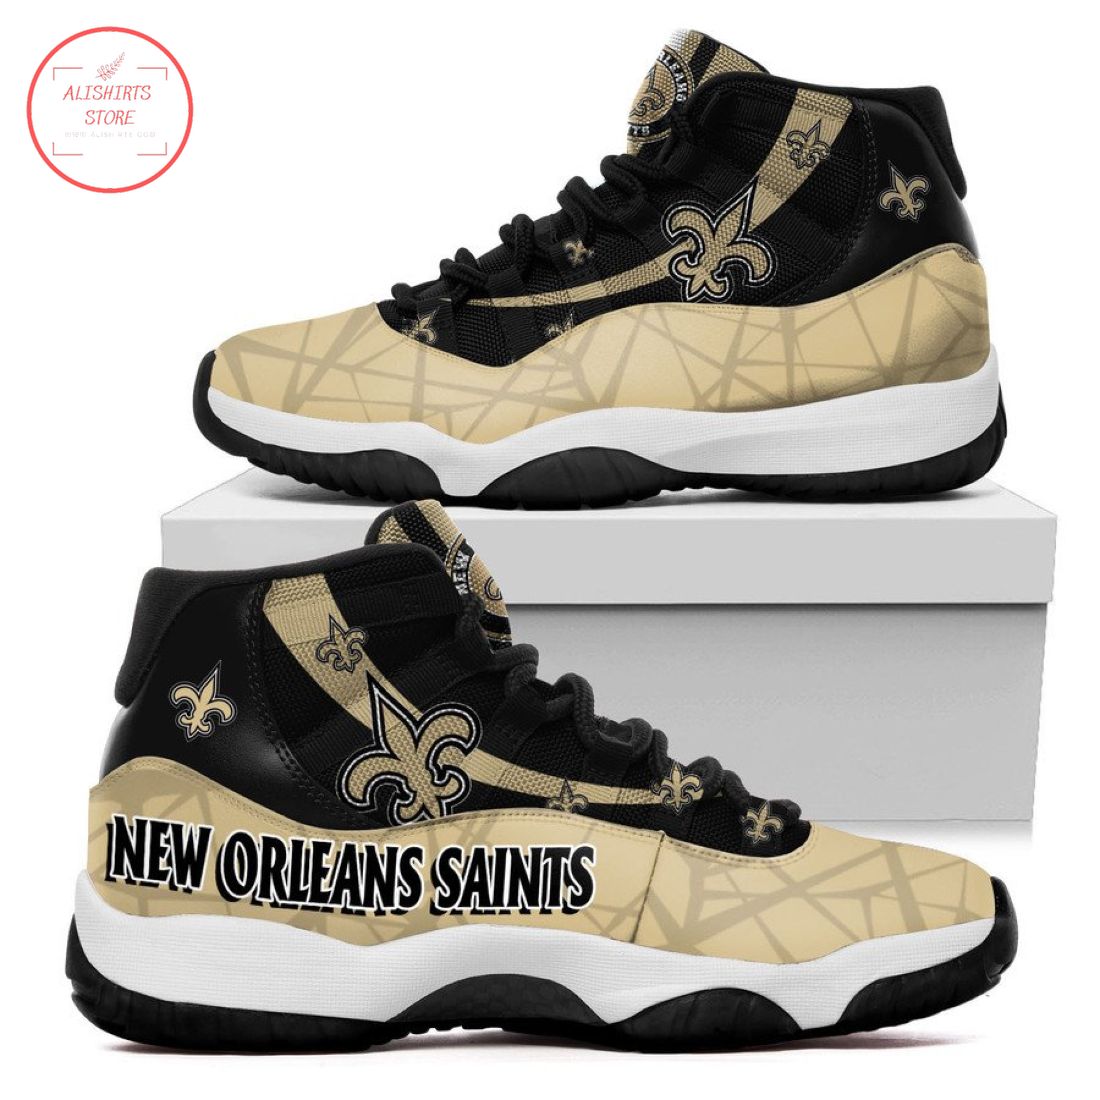 New Orleans Saints NFL New Air Jordan 11 Sneakers Shoes